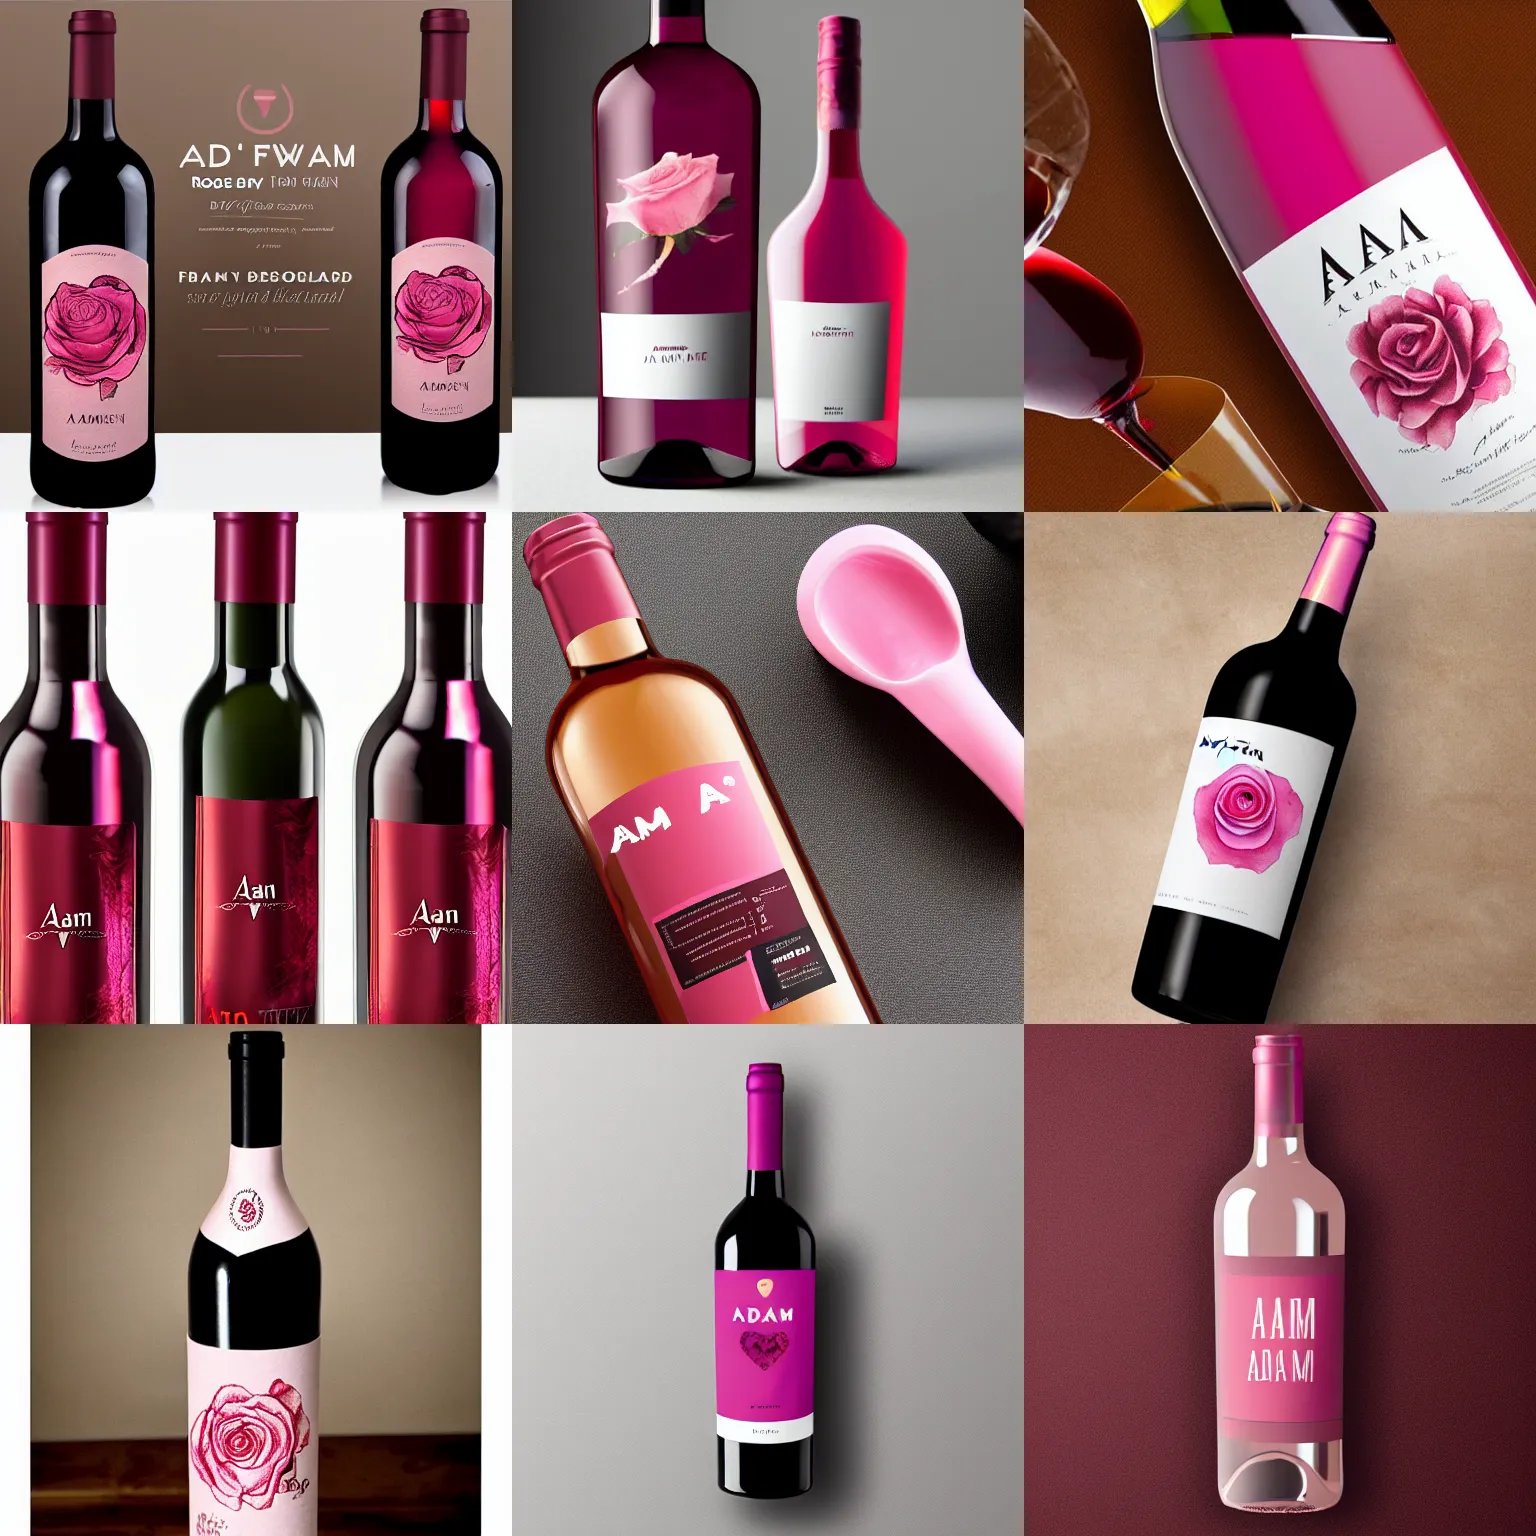 Prompt: adam's friendly rose wine, wine bottle, friendly modern design label, pink wine, manly